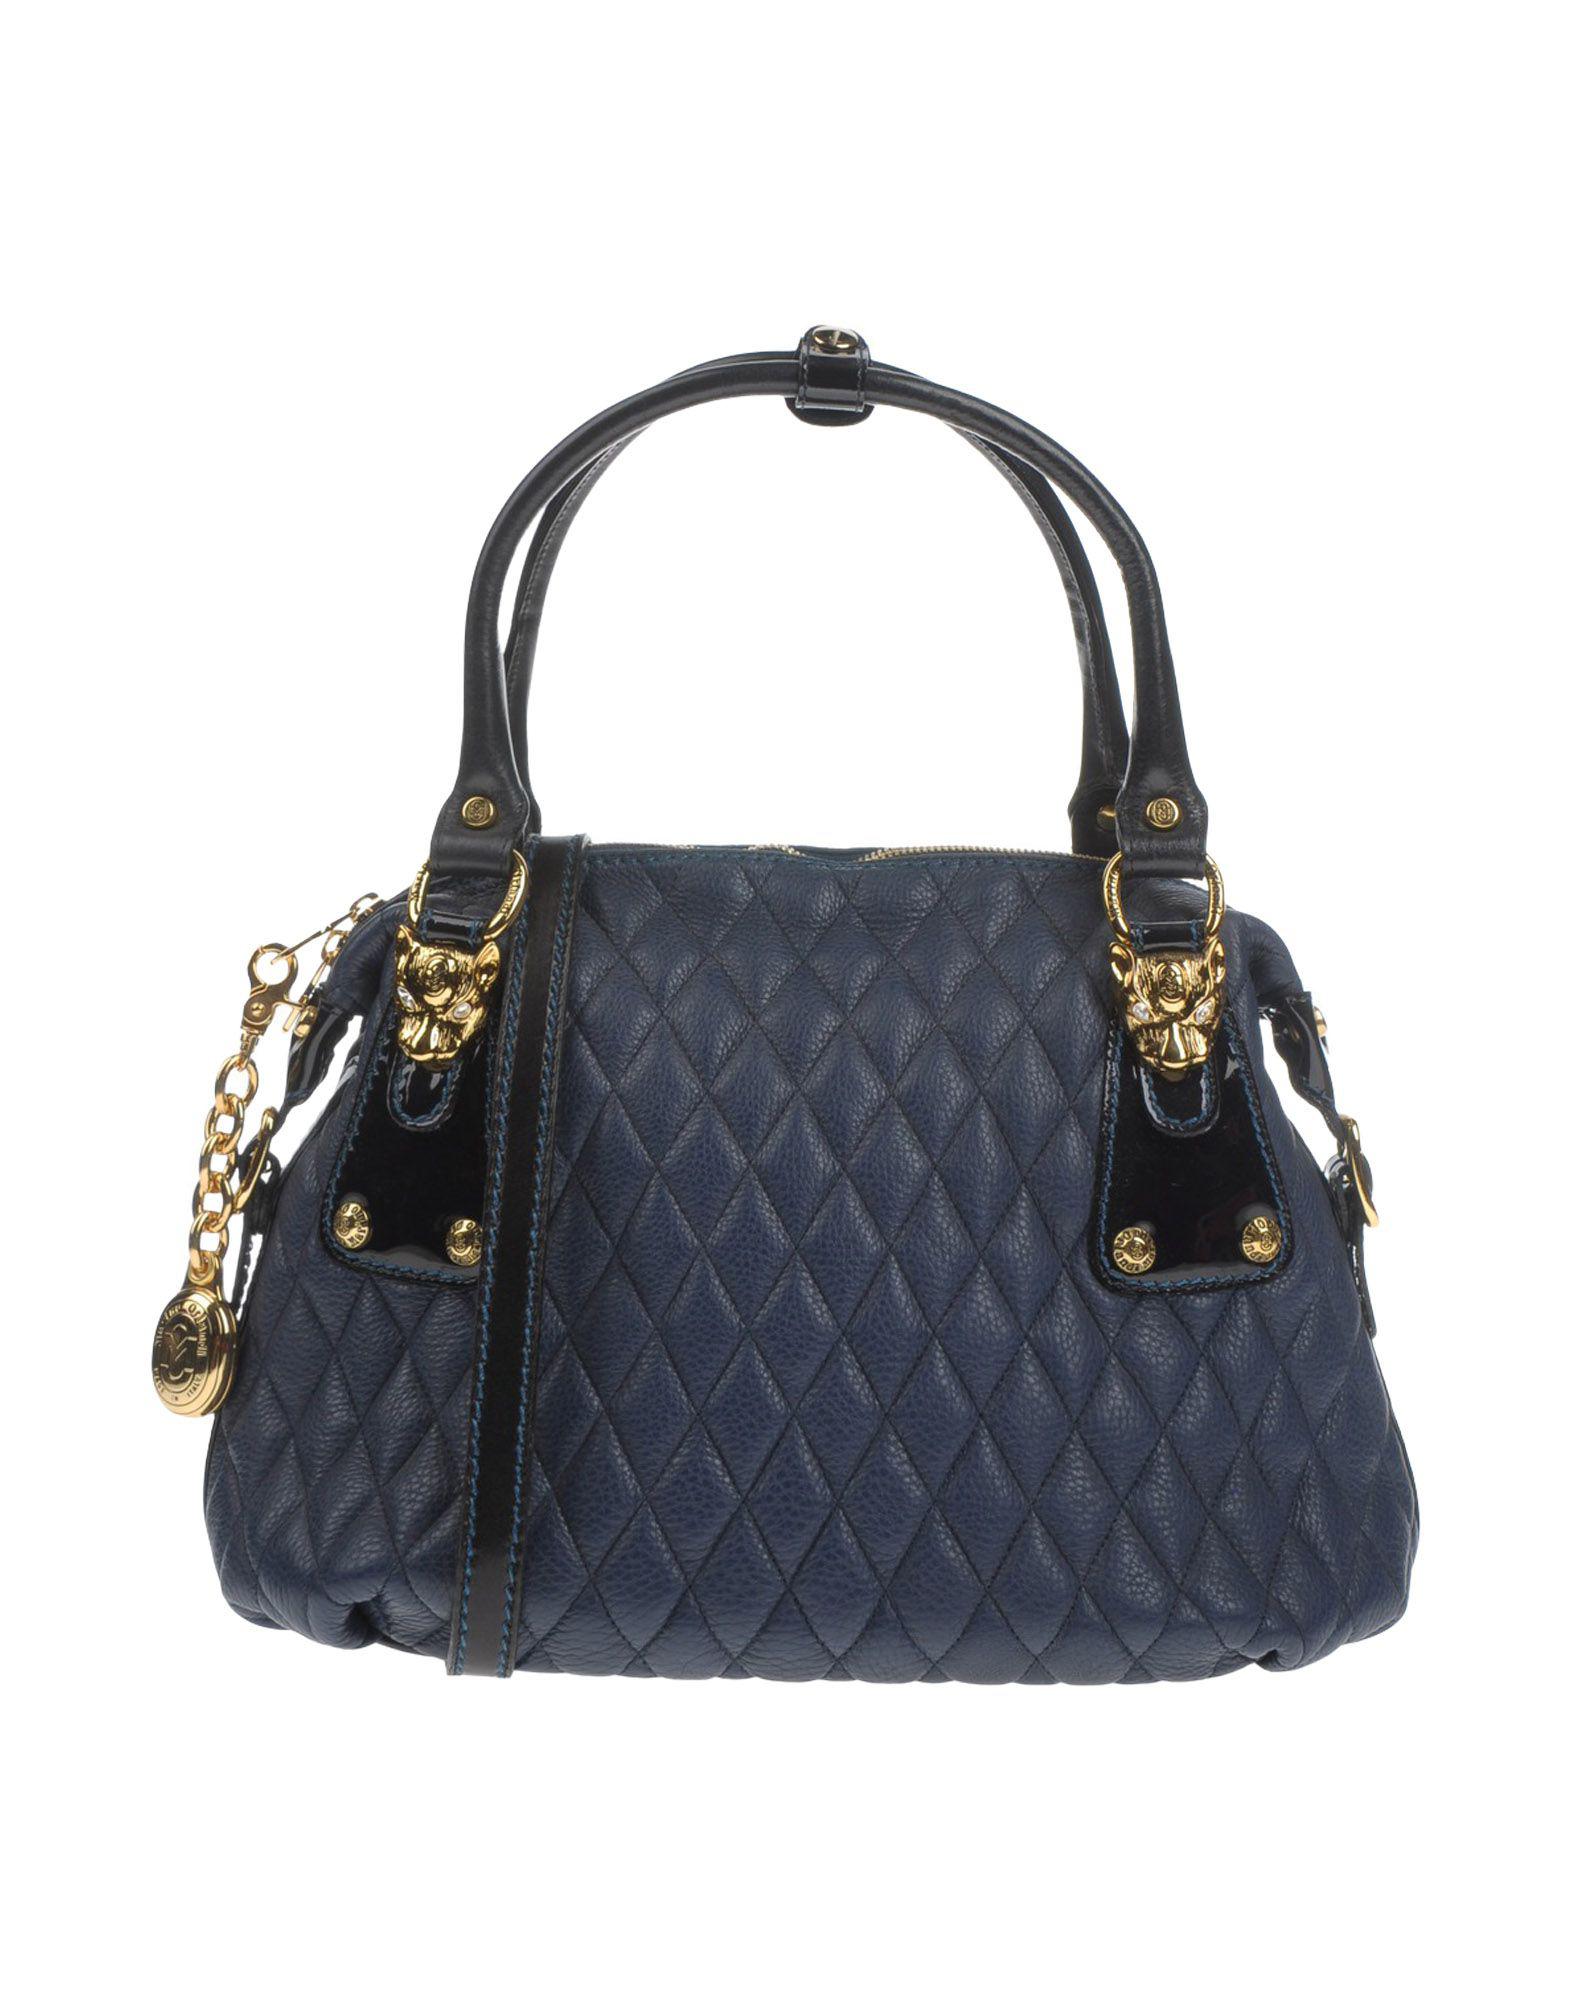 MARINO ORLANDI Leather Handbag in Dark Blue (Blue) - Lyst